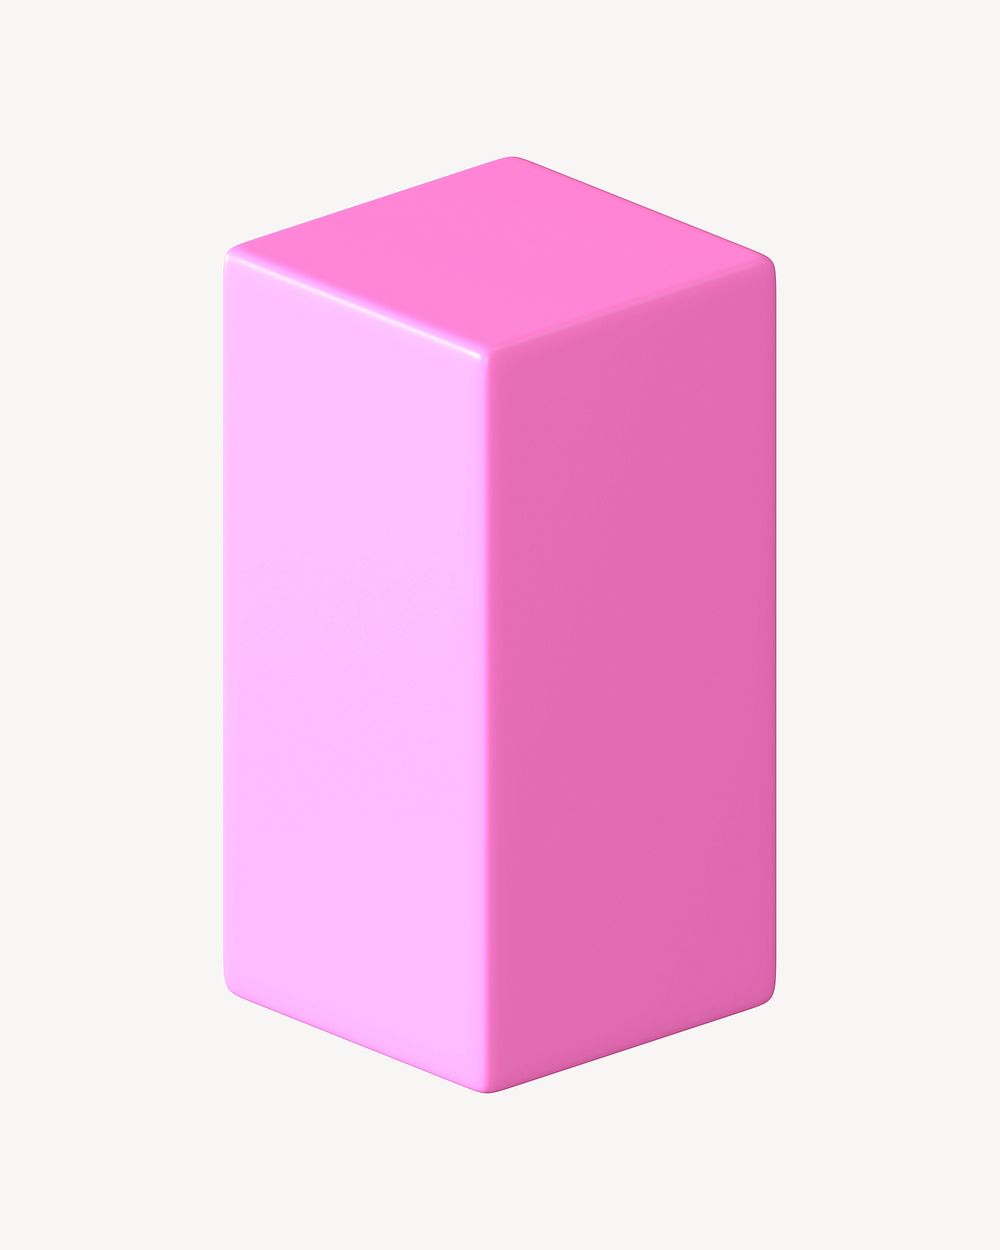 3D pink cuboid clipart, geometric shape psd